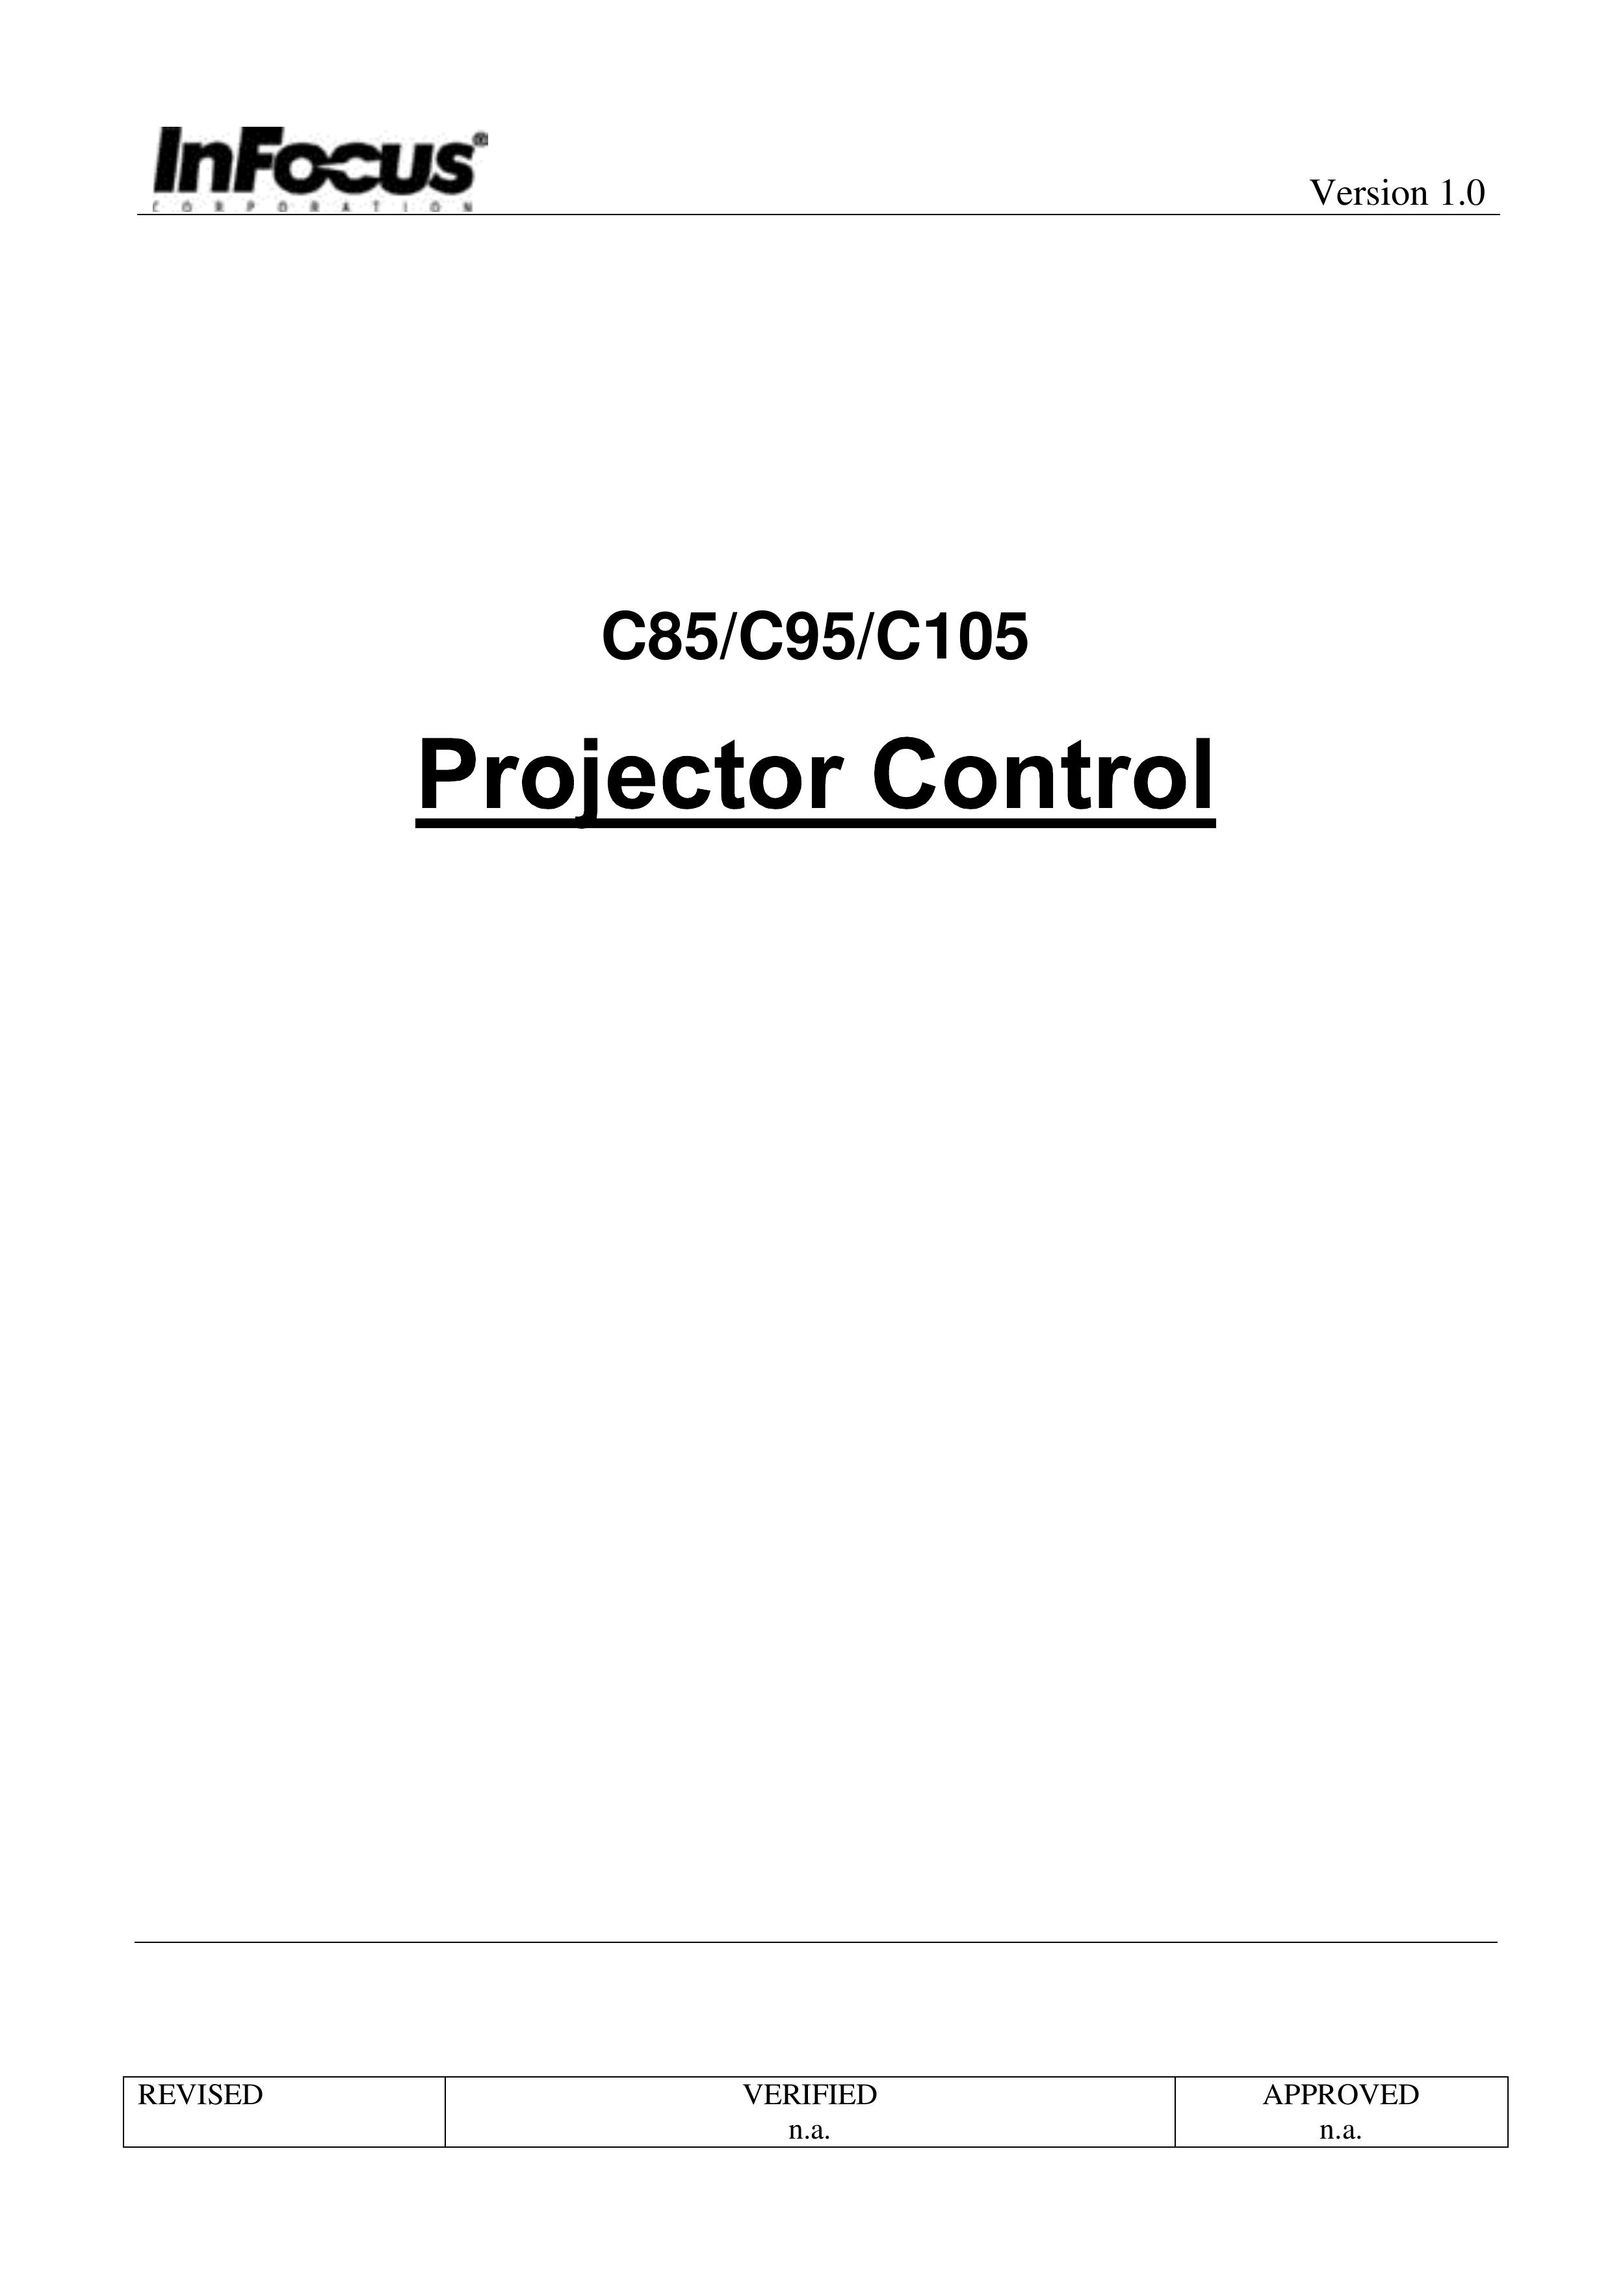 InFocus C85 Projector User Manual